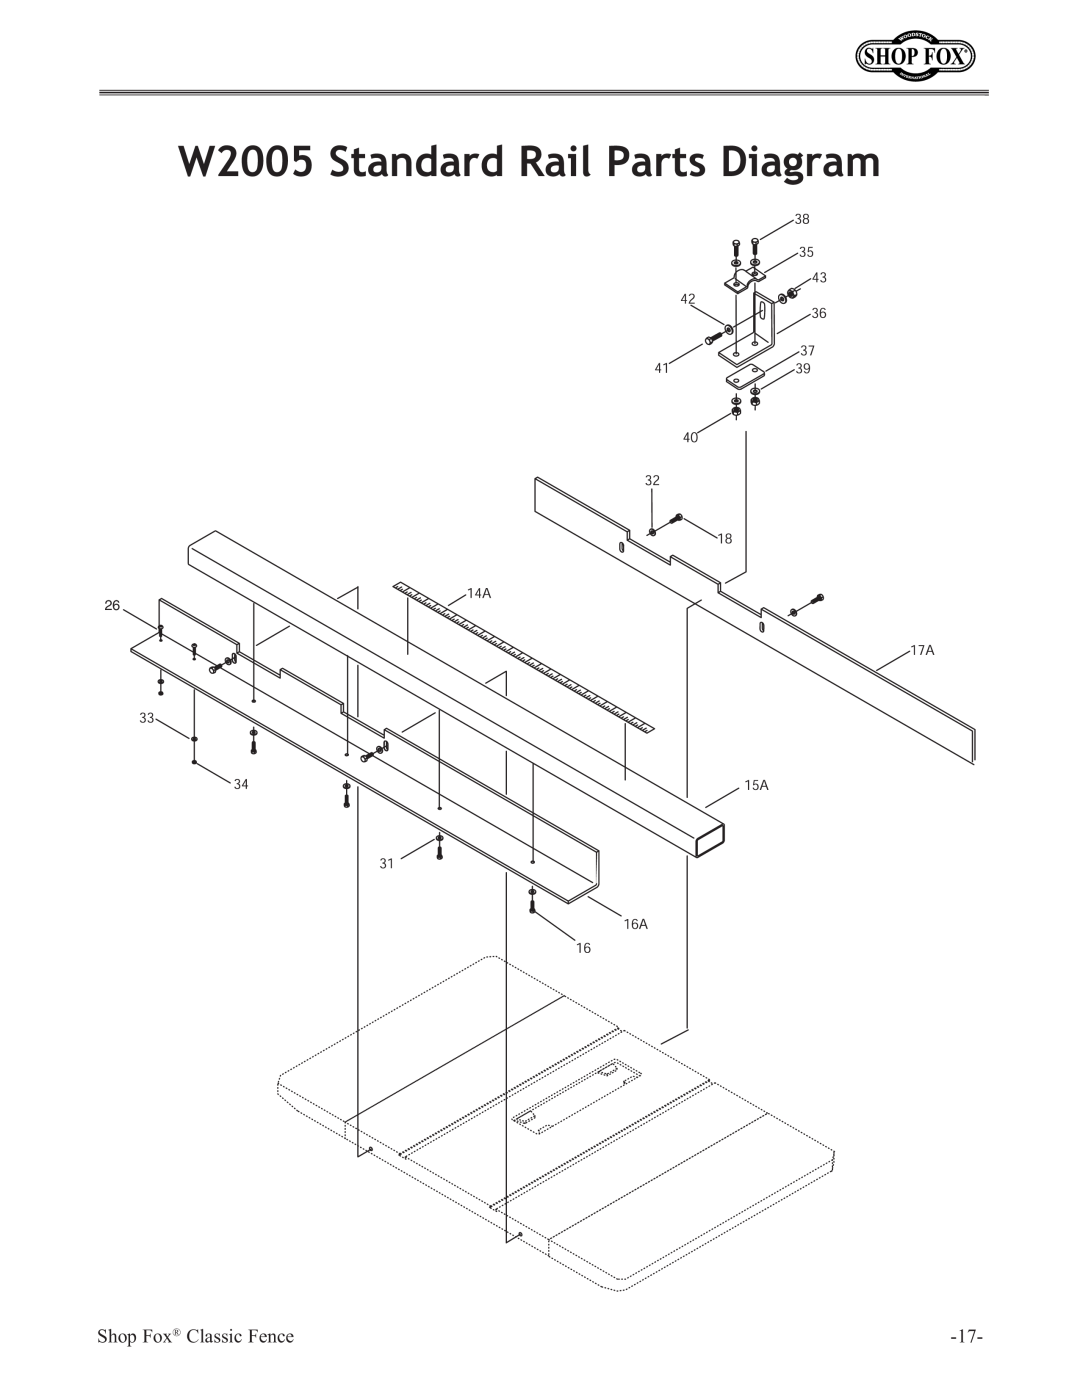 Woodstock instruction manual W2005 Standard Rail Parts Diagram, Shop Fox Classic Fence 